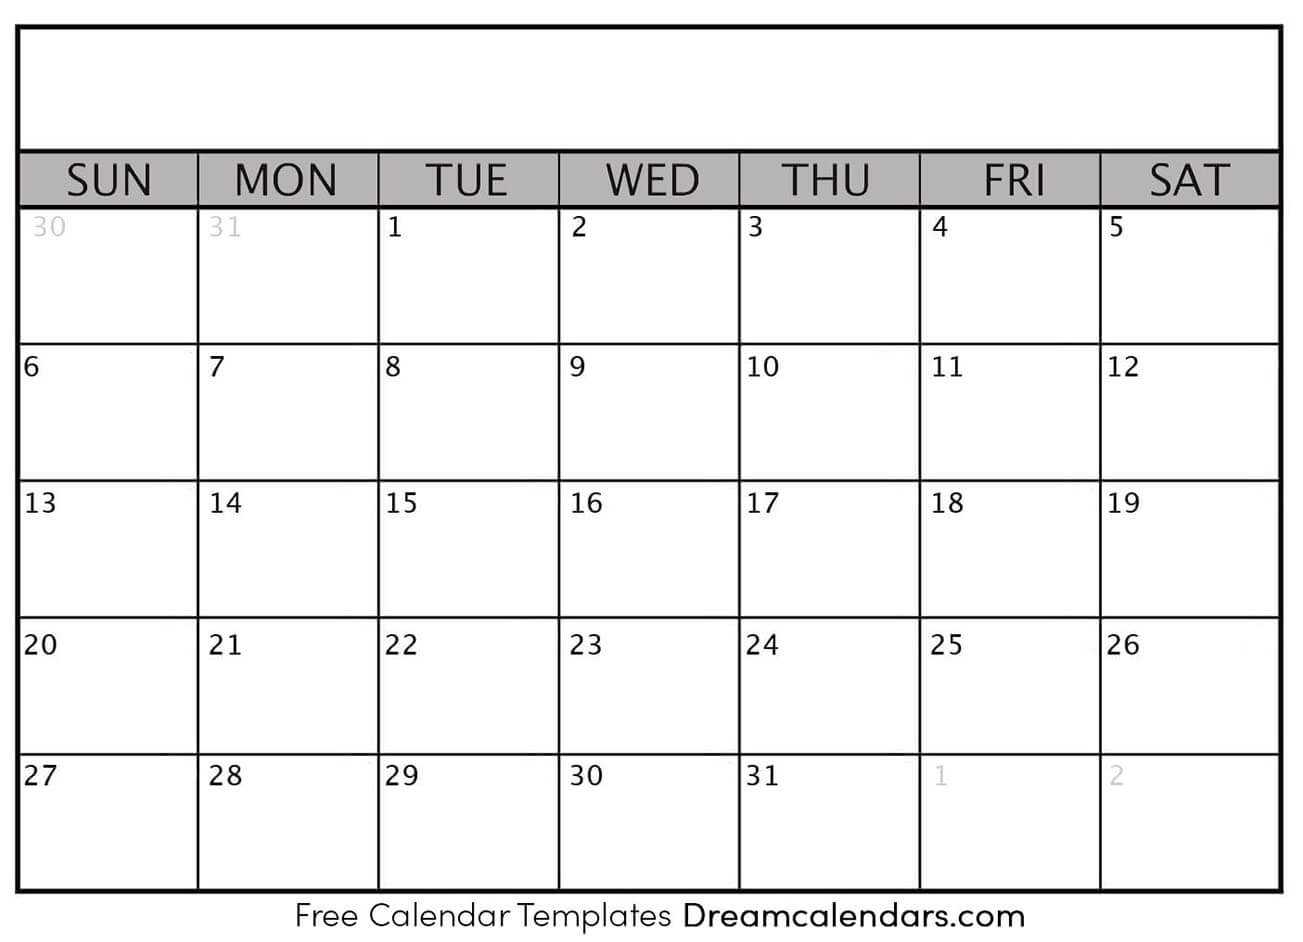 Printable Blank Calendar 2020 | Dream Calendars Within Blank Calender Template